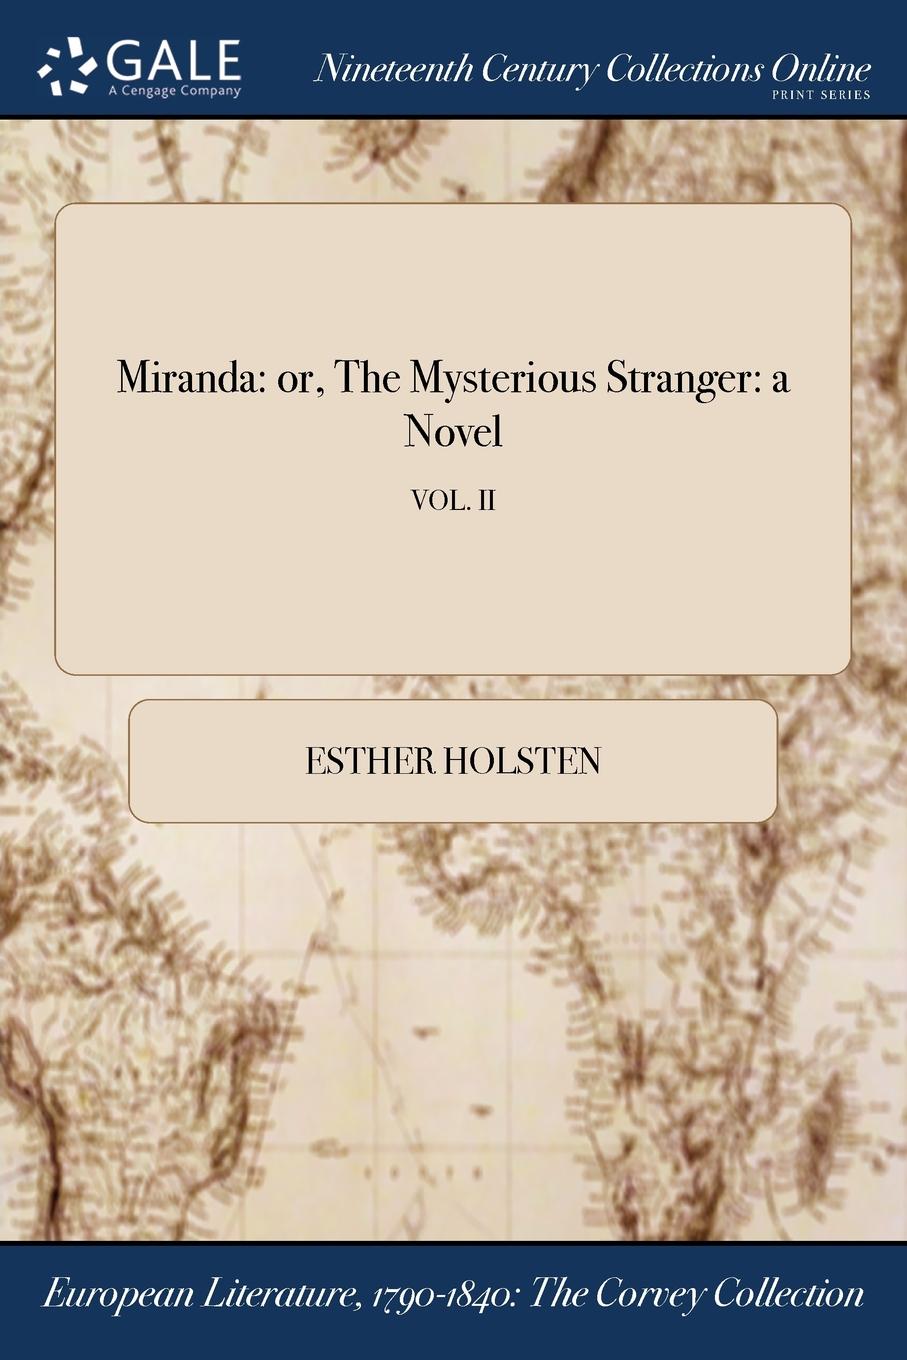 Miranda. or, The Mysterious Stranger: a Novel; VOL. II